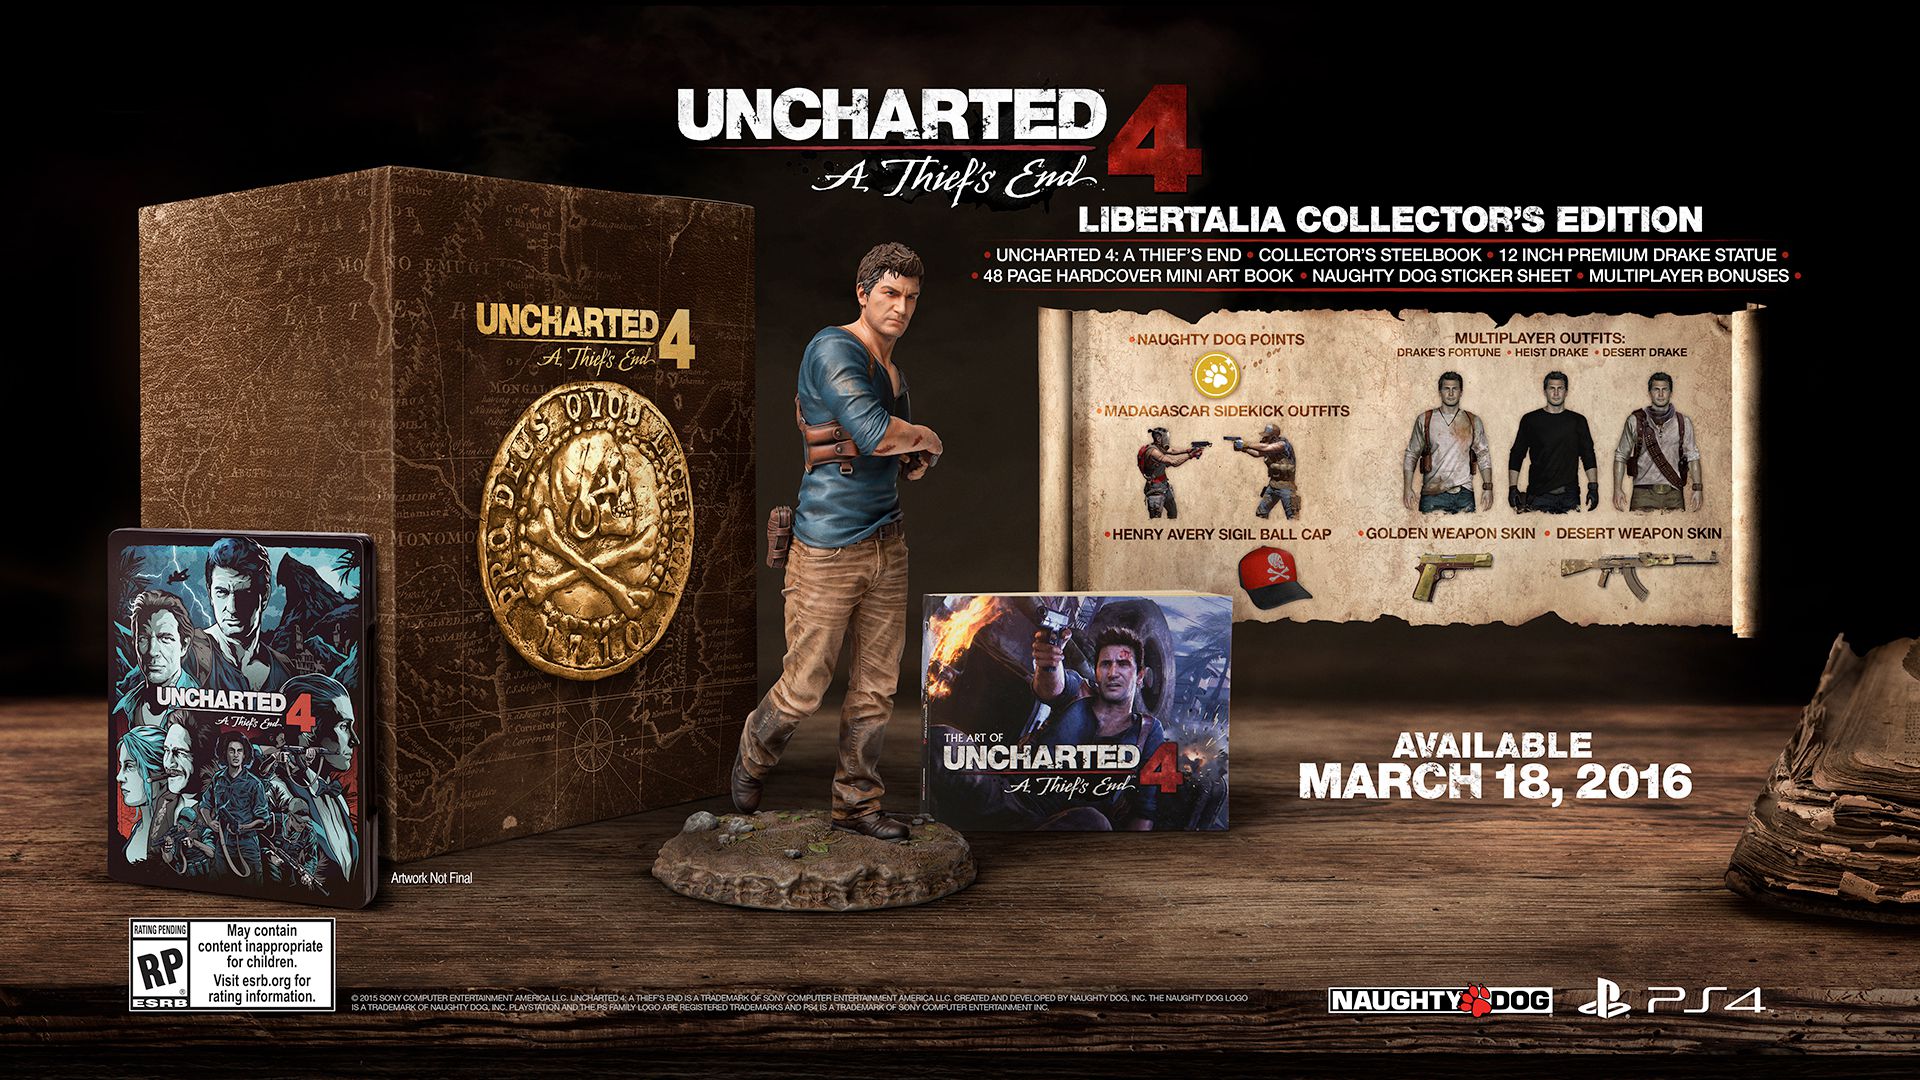 Uncharted 4 Libertalia Edition